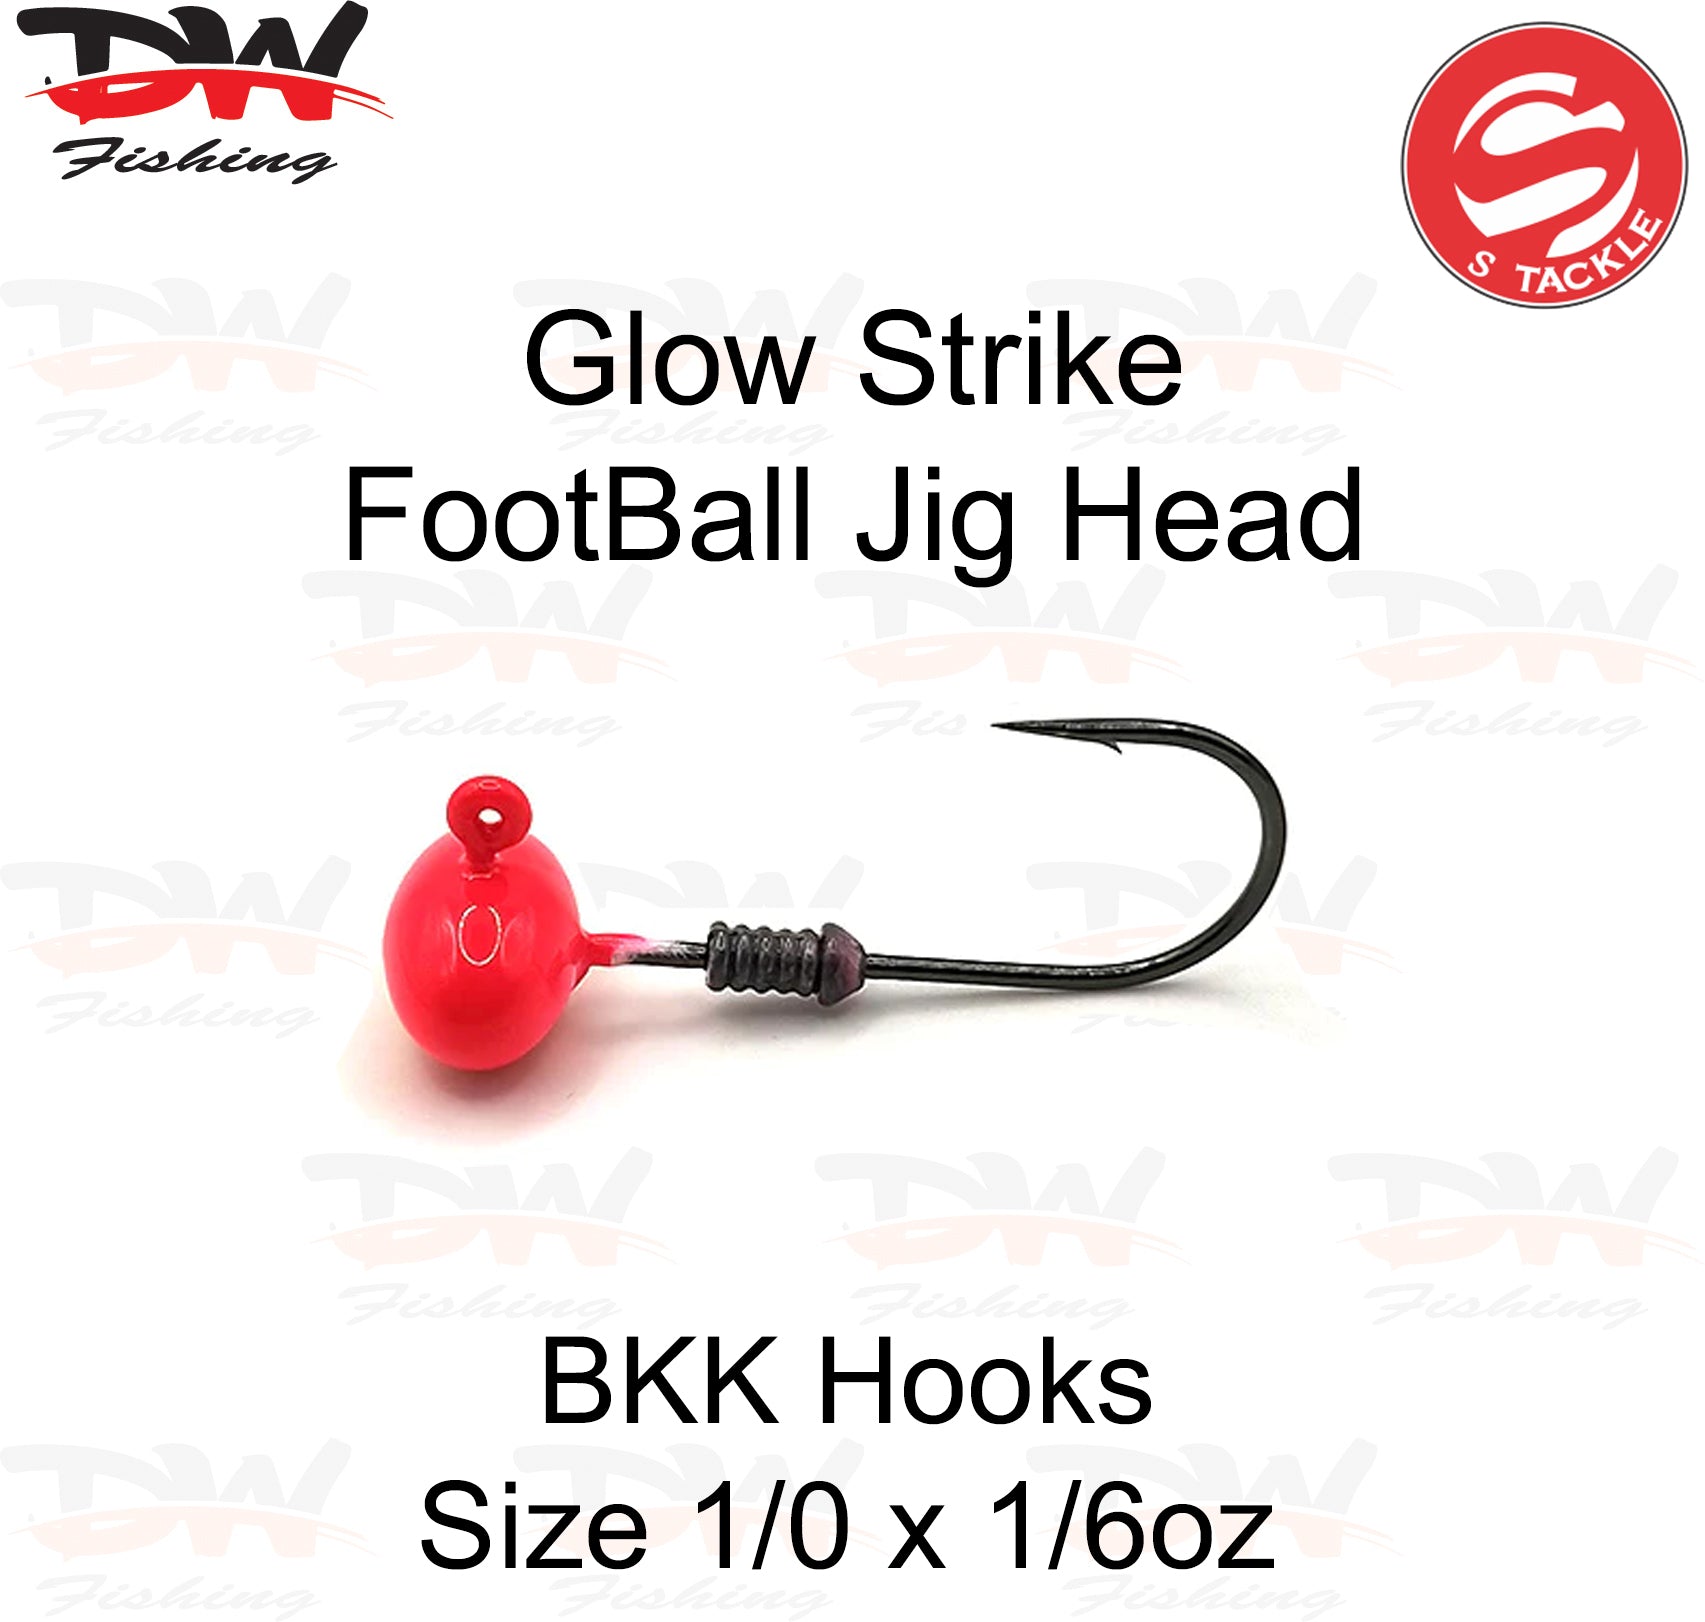 S Tackle Glow strike football jig head on BKK hooks size 1/0 1/6oz